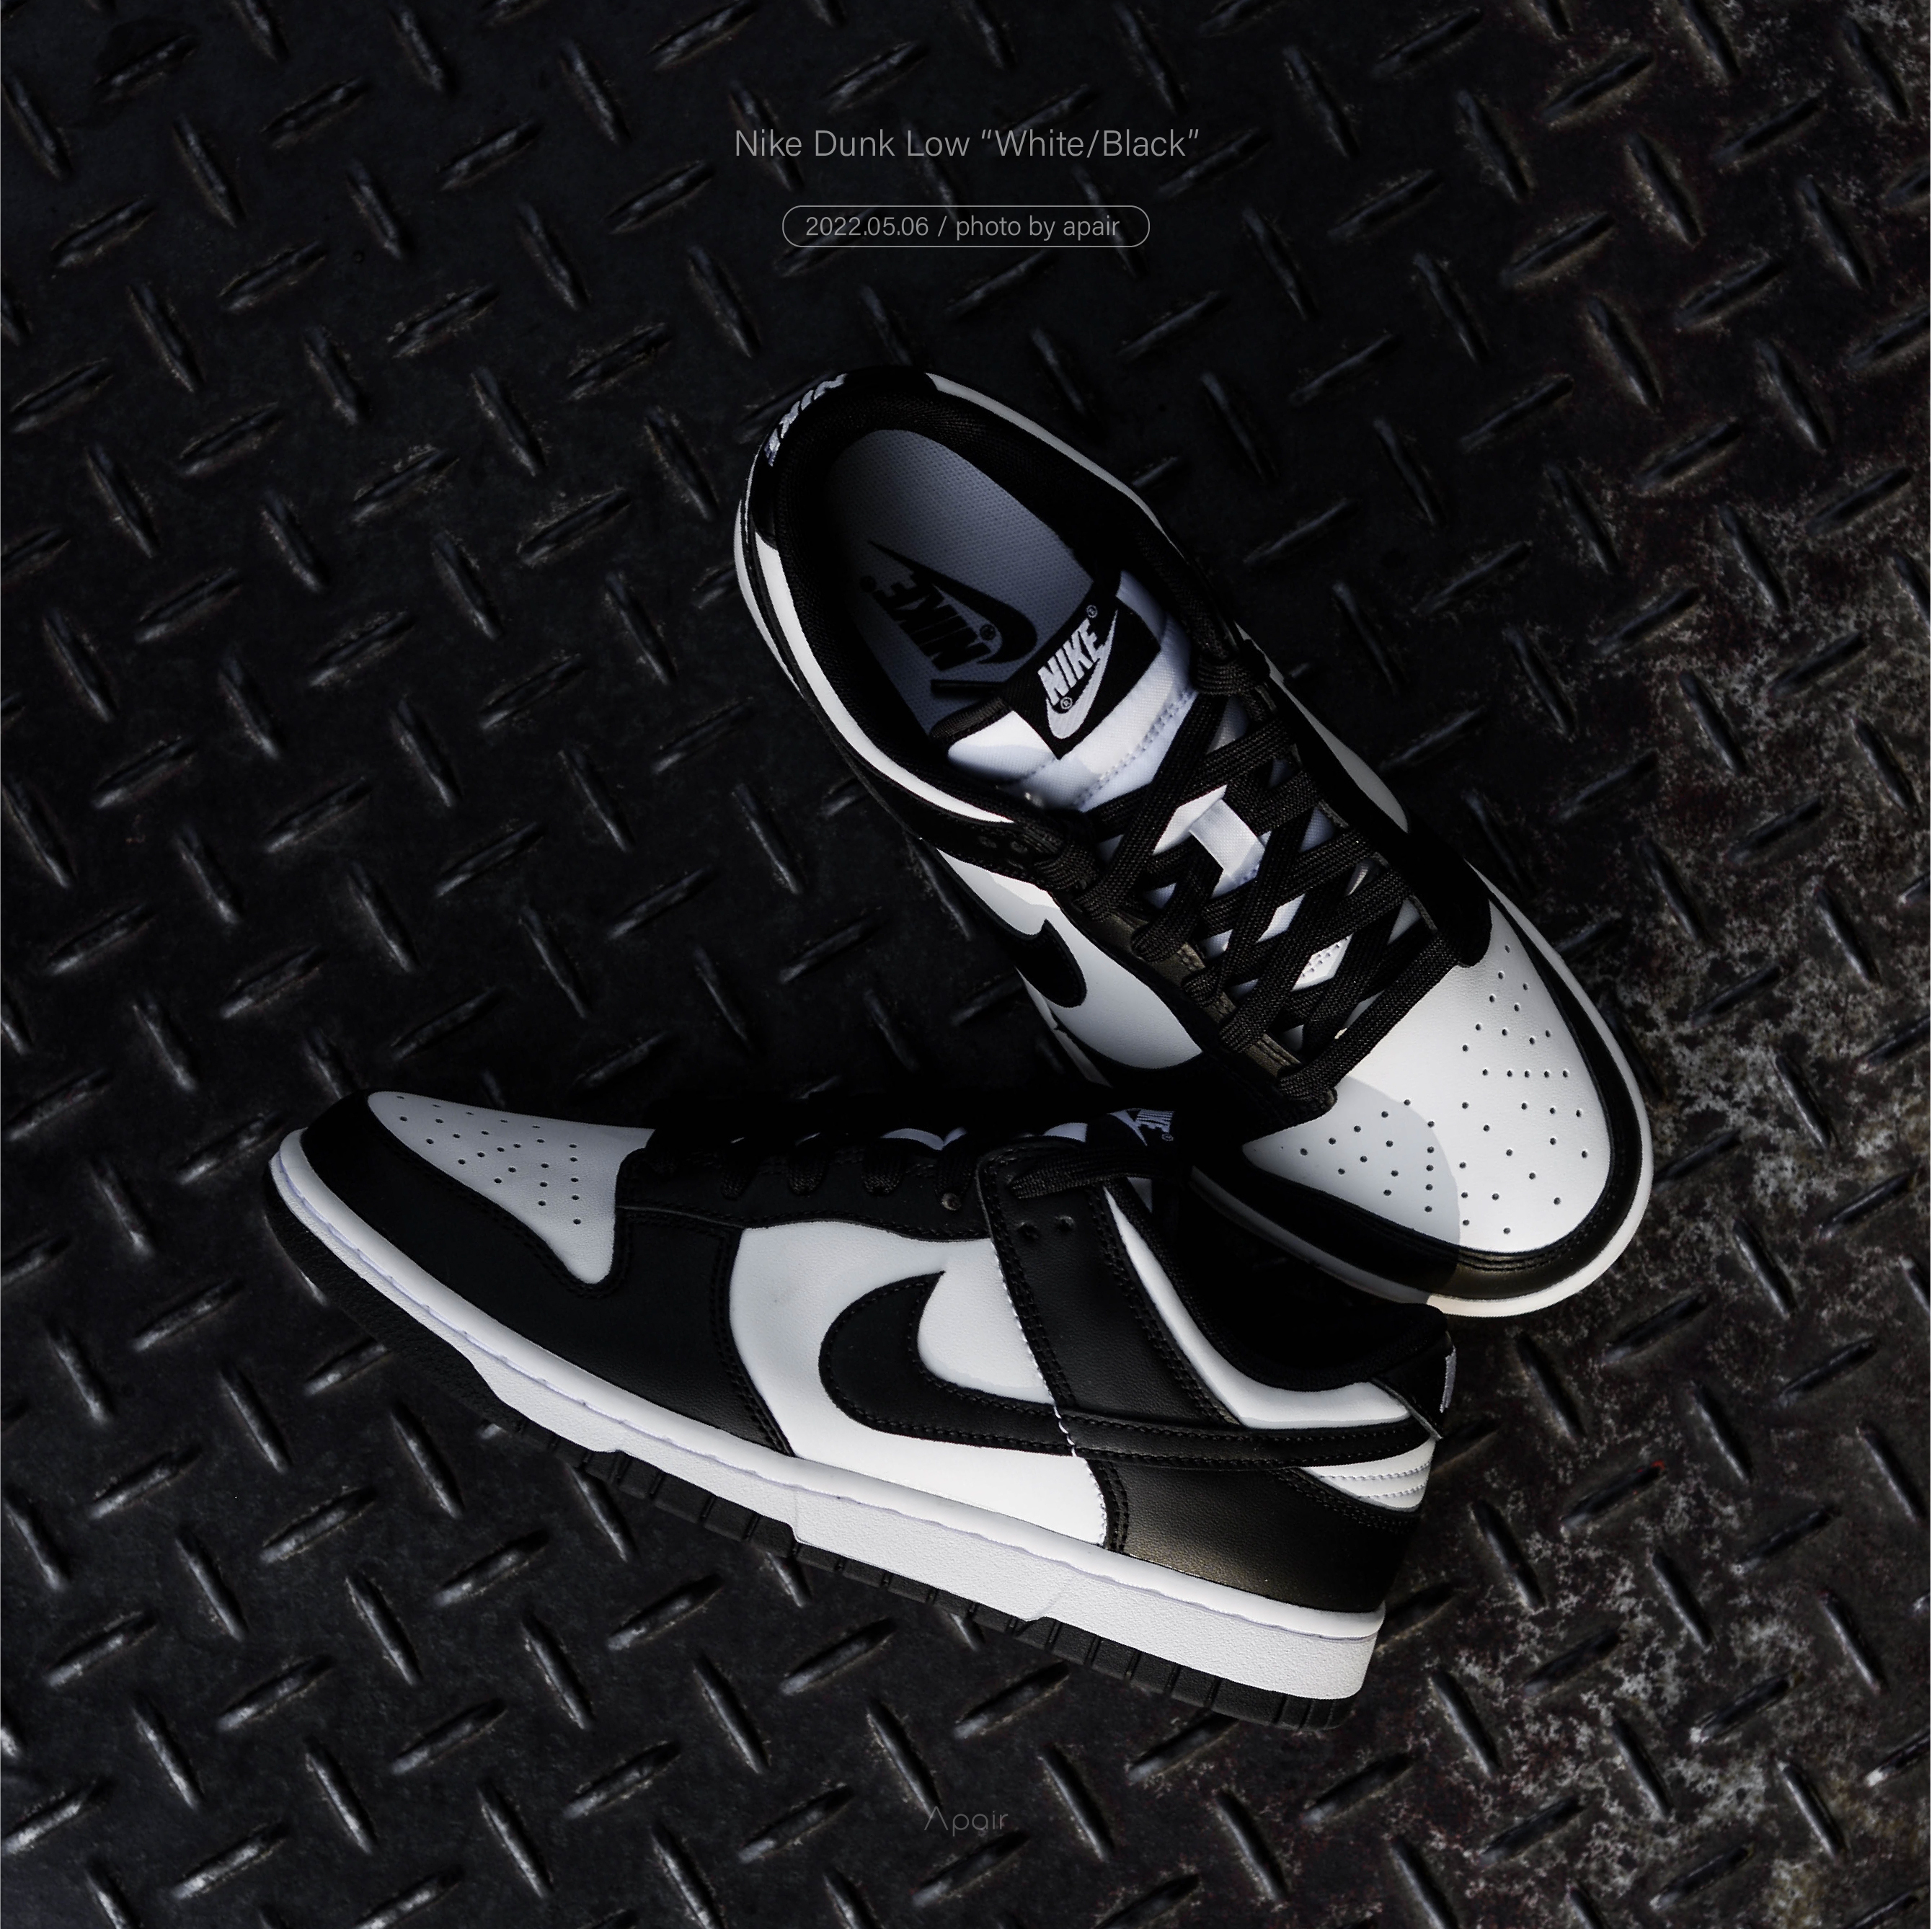 APAIR】 Nike Dunk Low “White/Black” DD1391-100 黑白熊貓